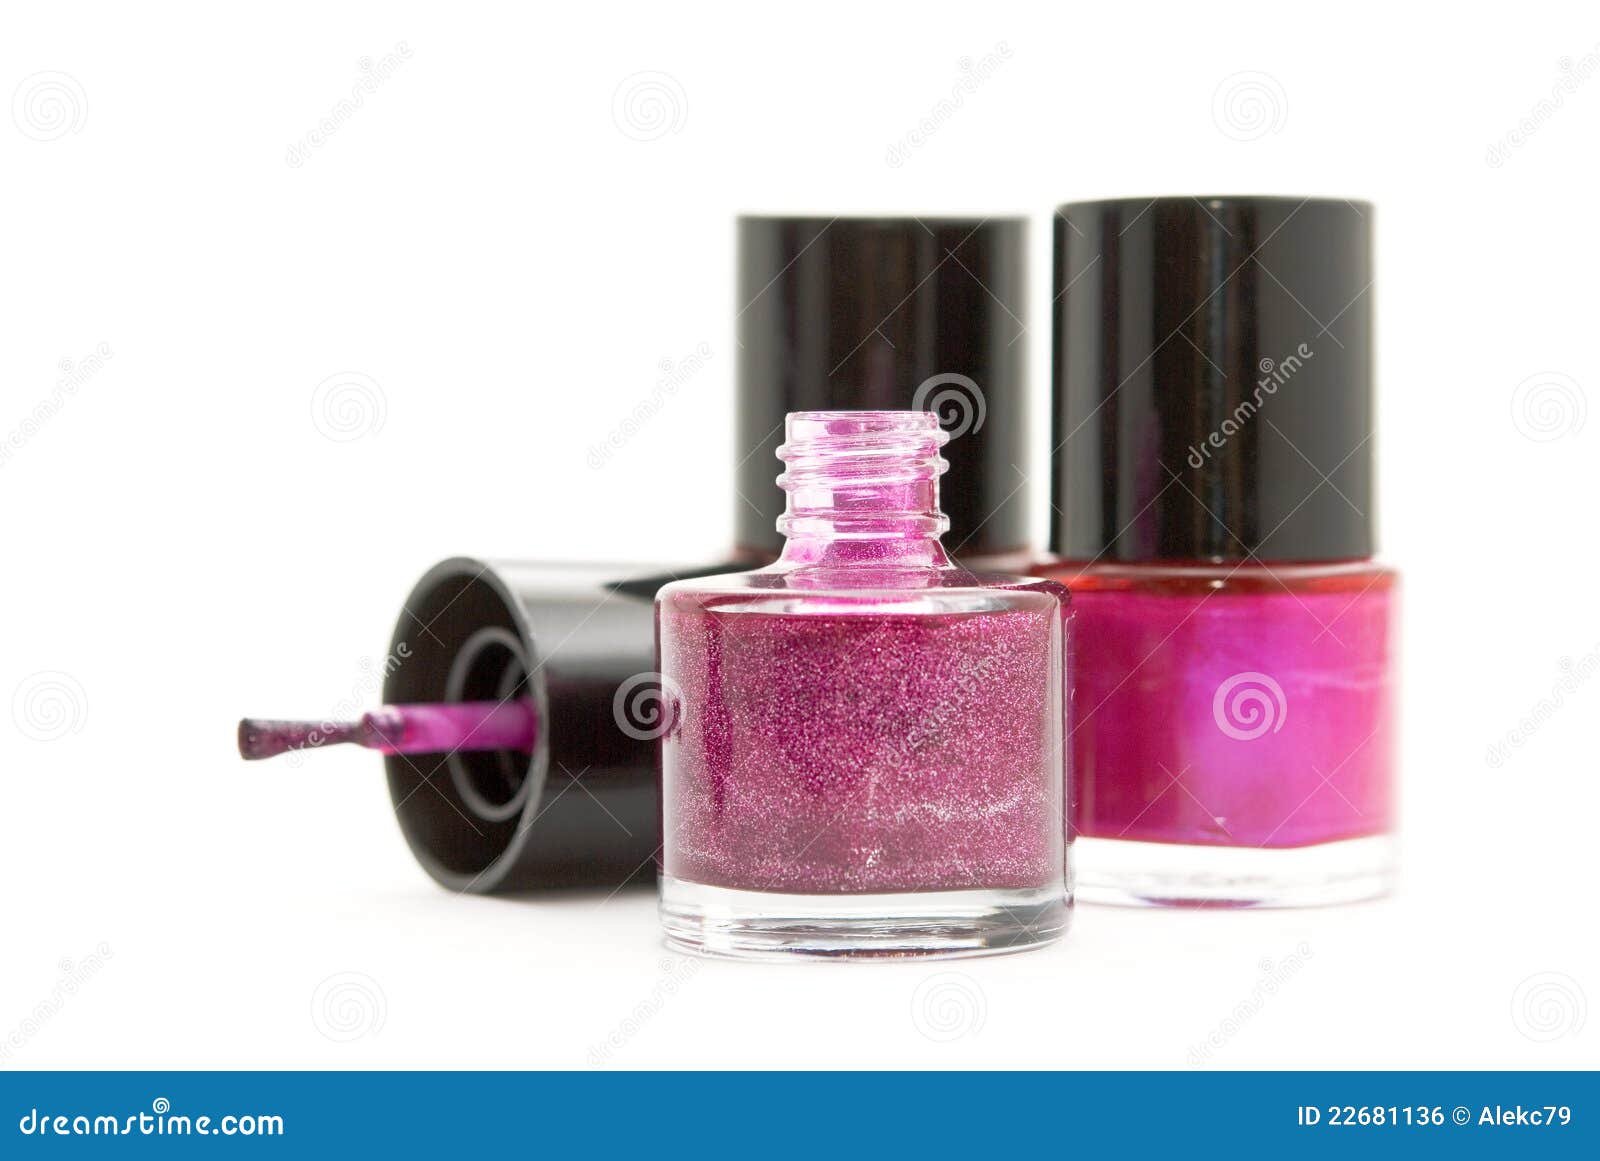 Nail Polish On A White Background Stock Photo - Image of manicure